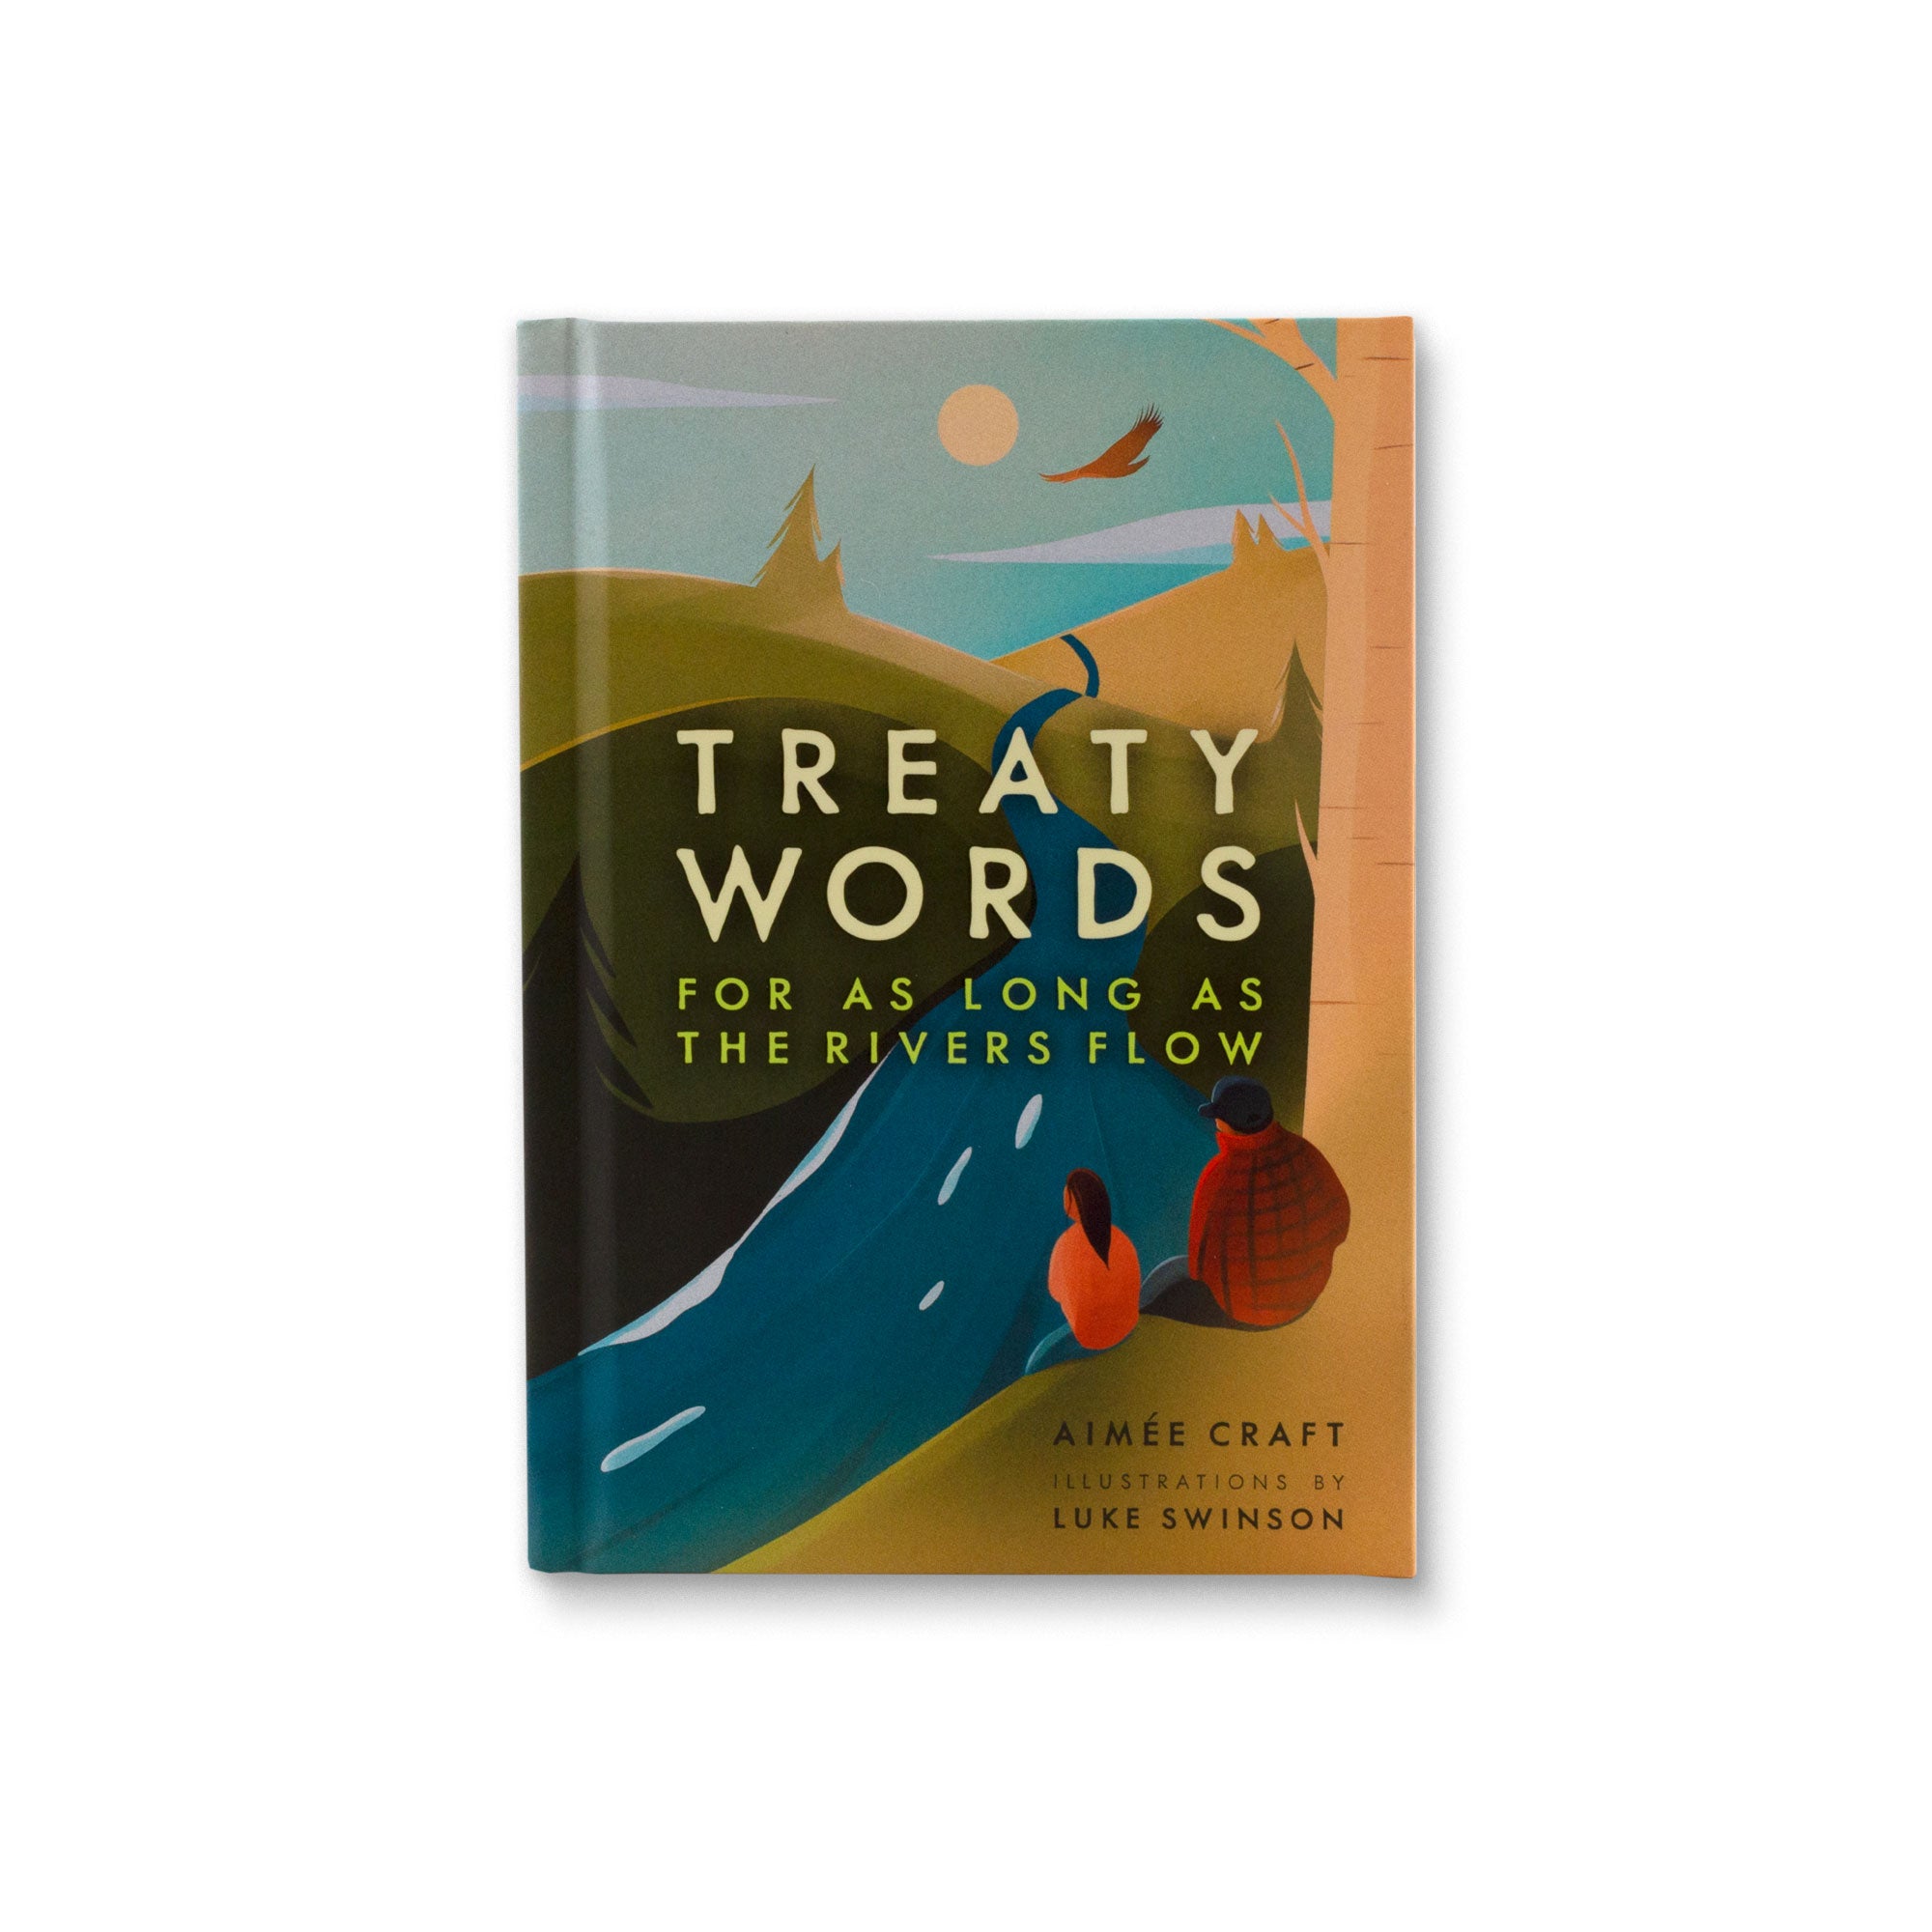 Treaty Words